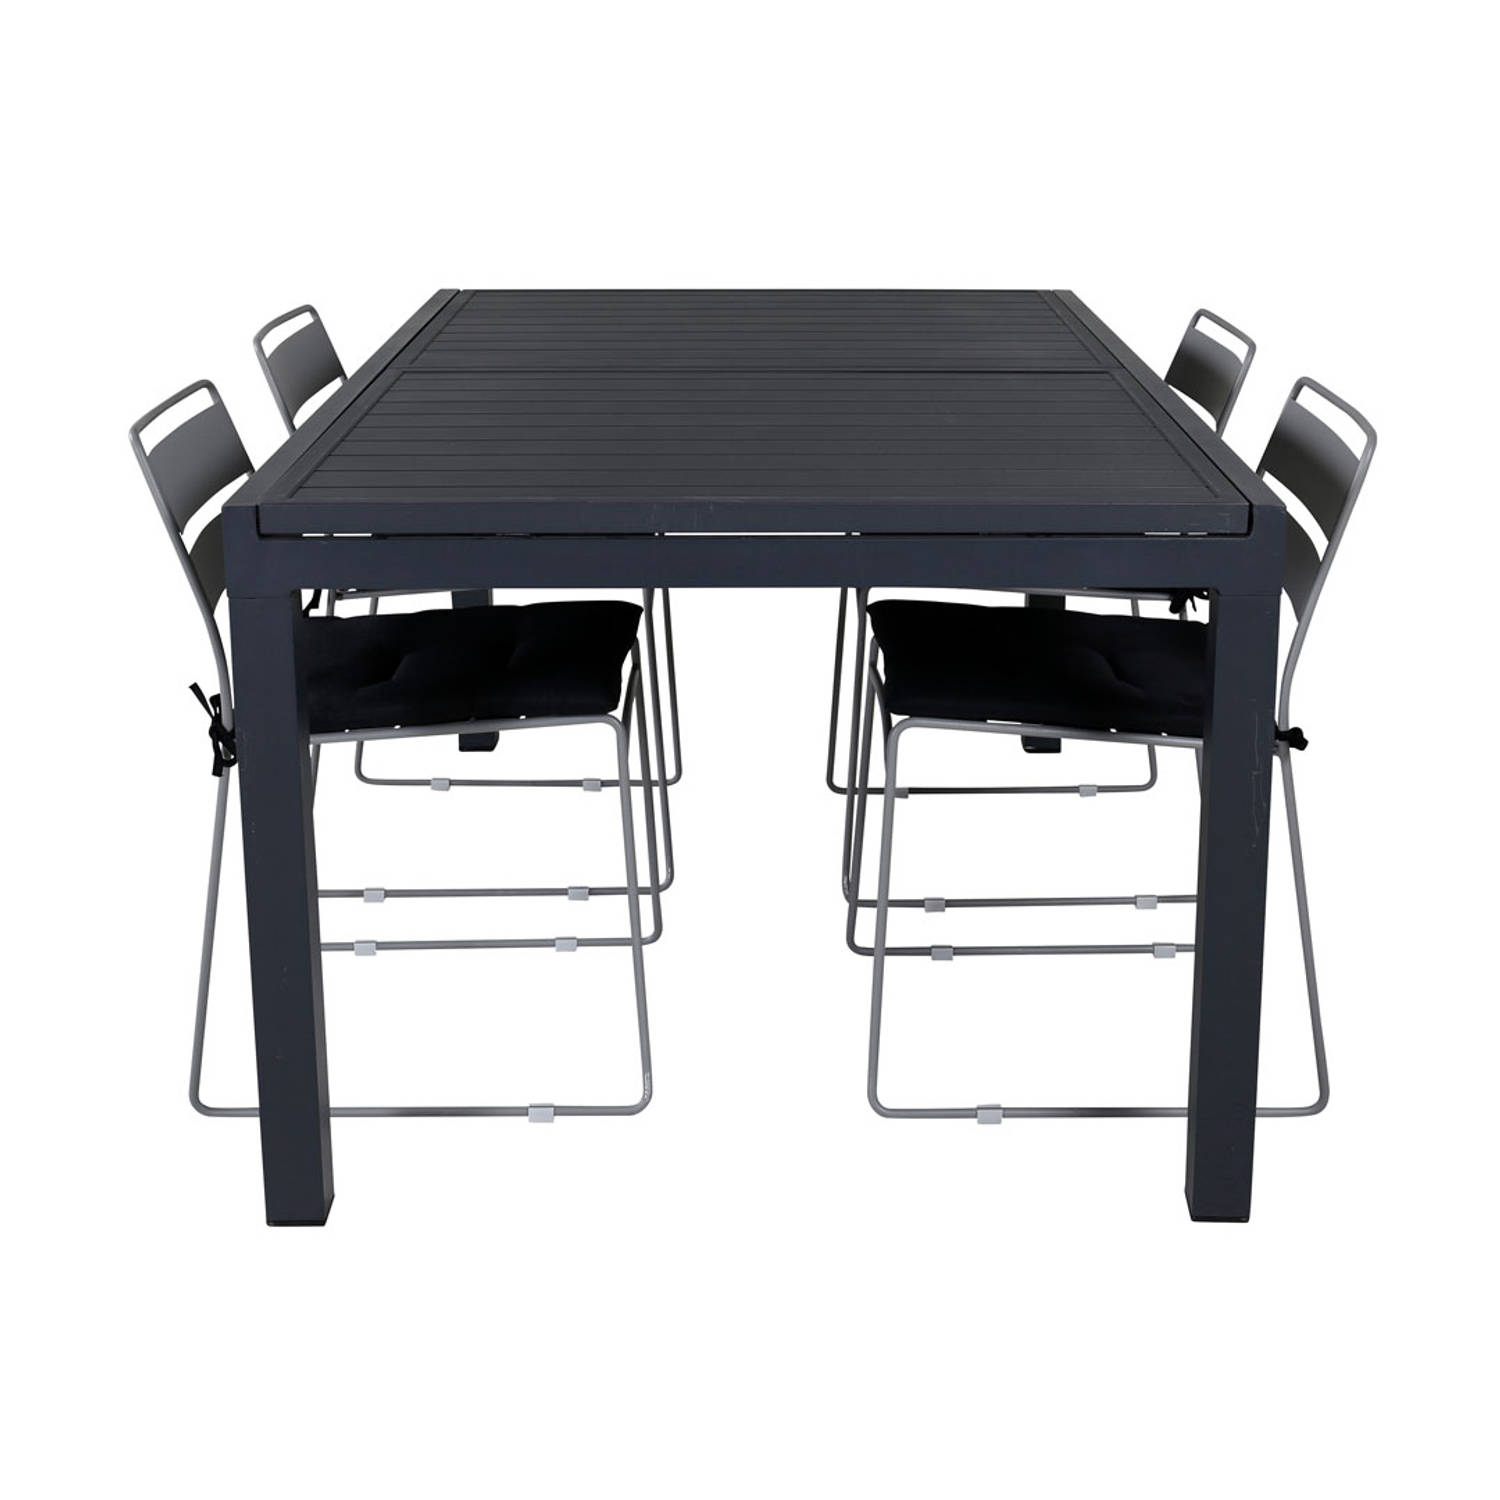 Marbella tuinmeubelset tafel 100x160/240cm en 4 stoel Lina grijs, zwart.